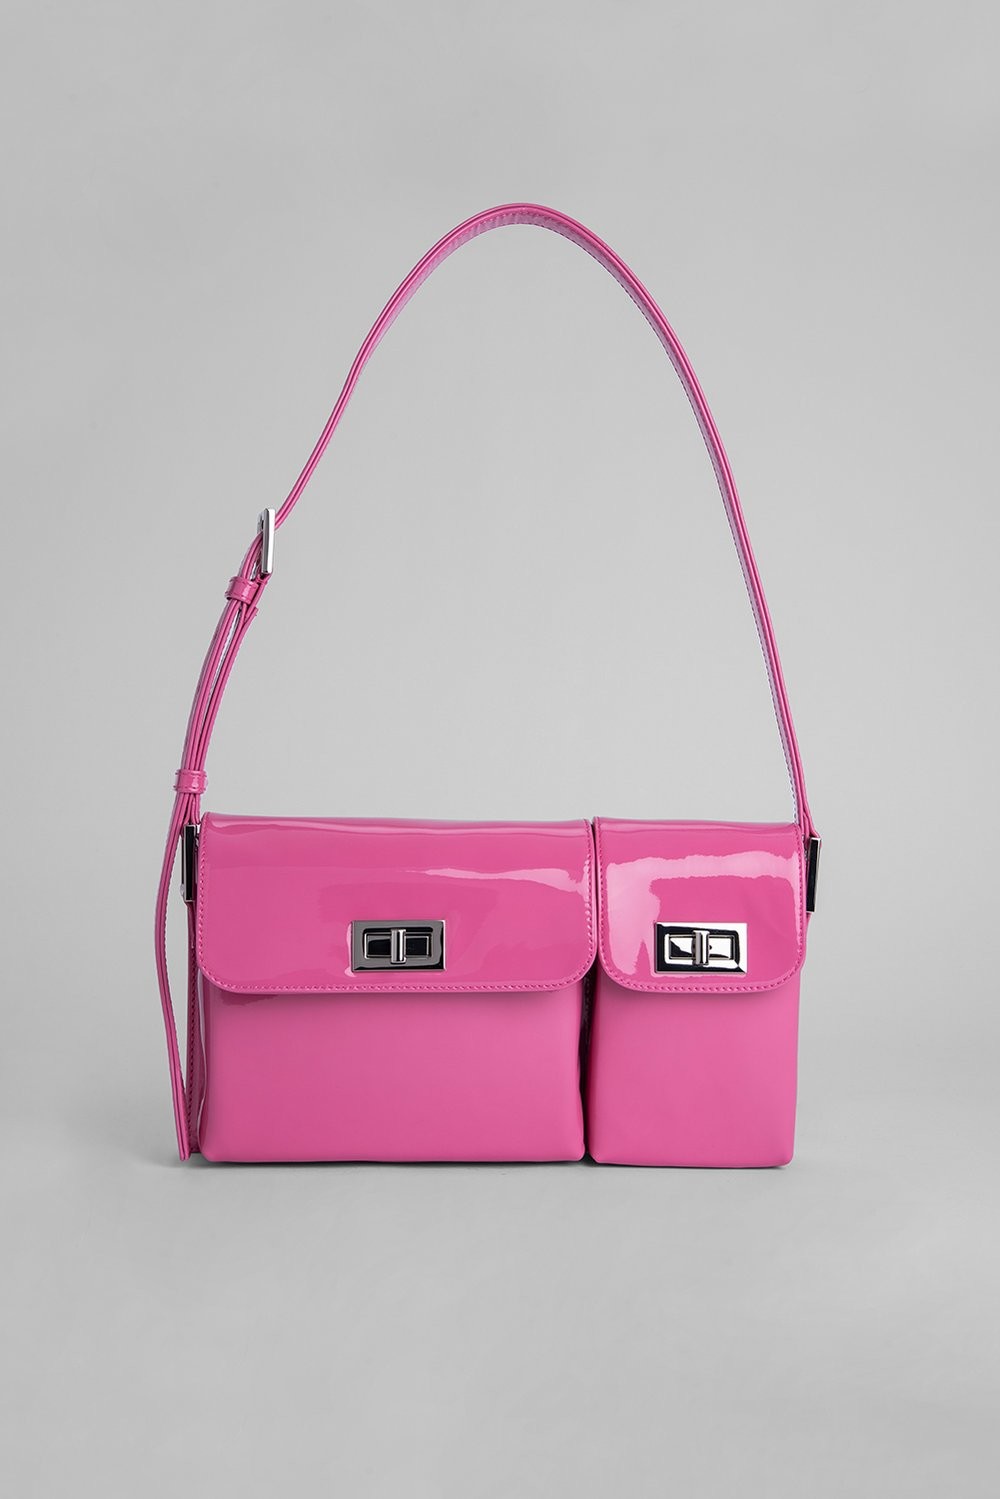 Byfar Pink Bag Sac Rose Baguette Fashion Blog Mode Tendance Ete 2020